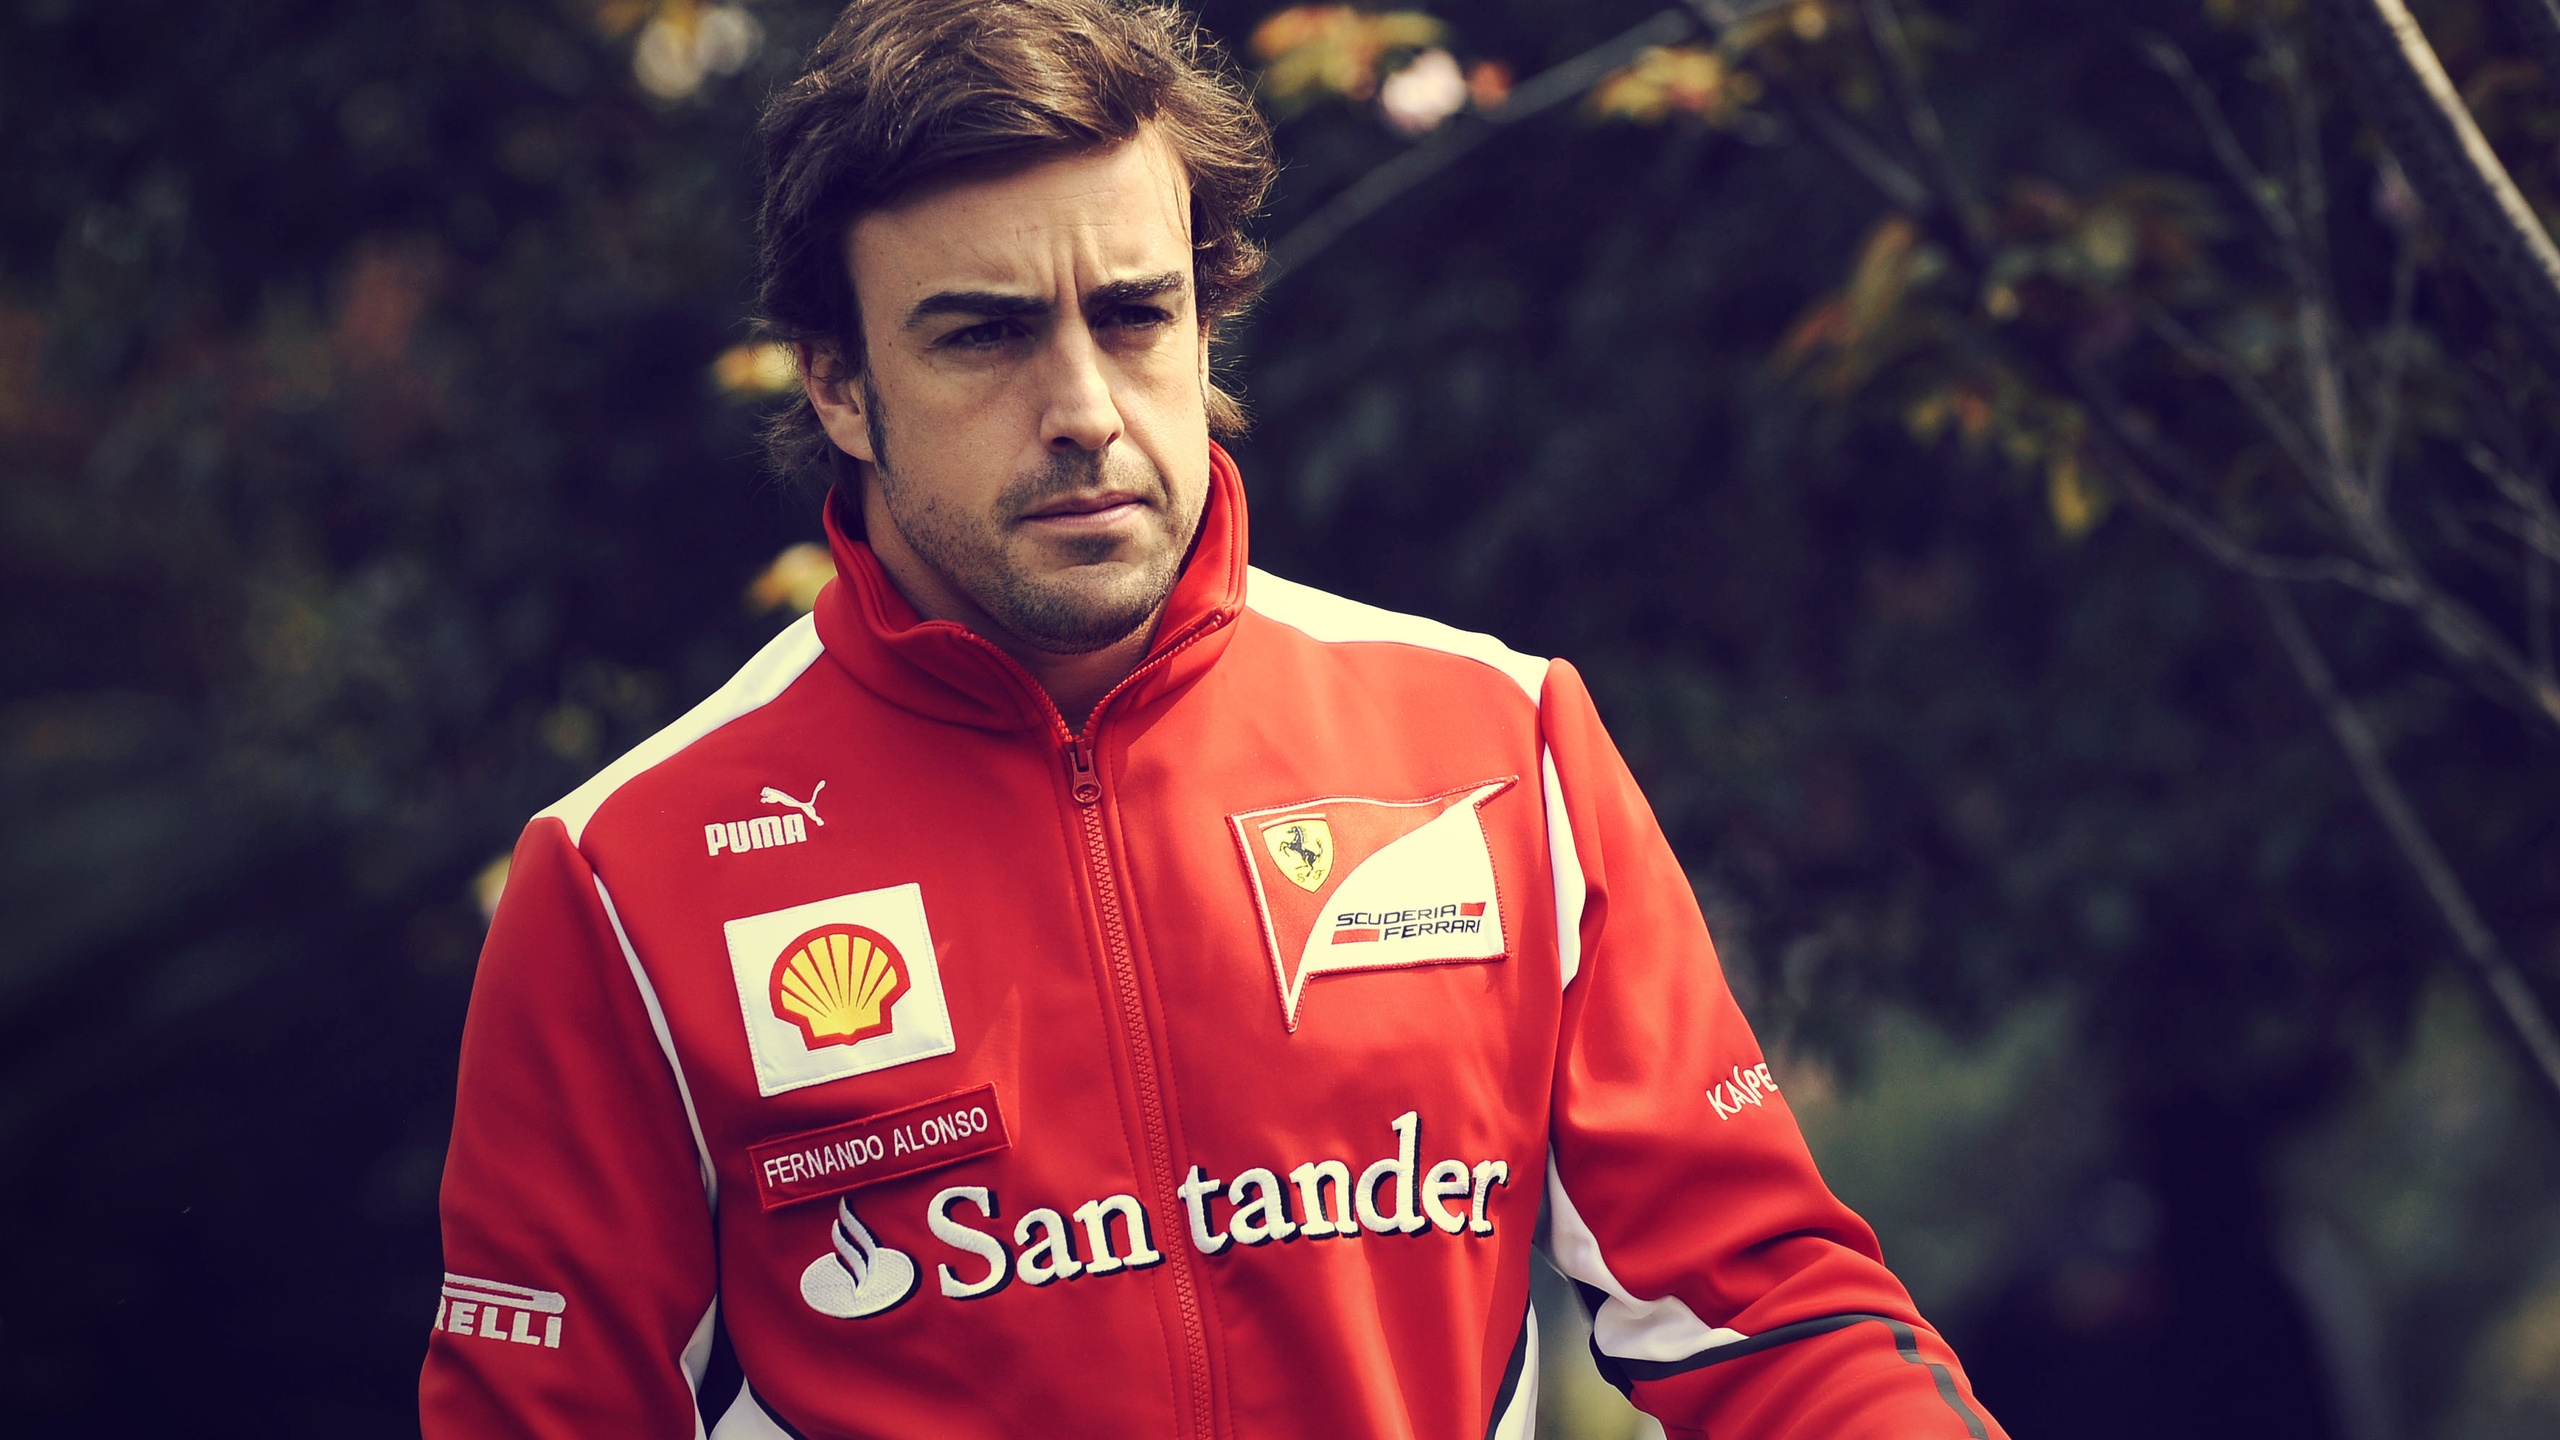 Fernando Alonso Look for 2560x1440 HDTV resolution